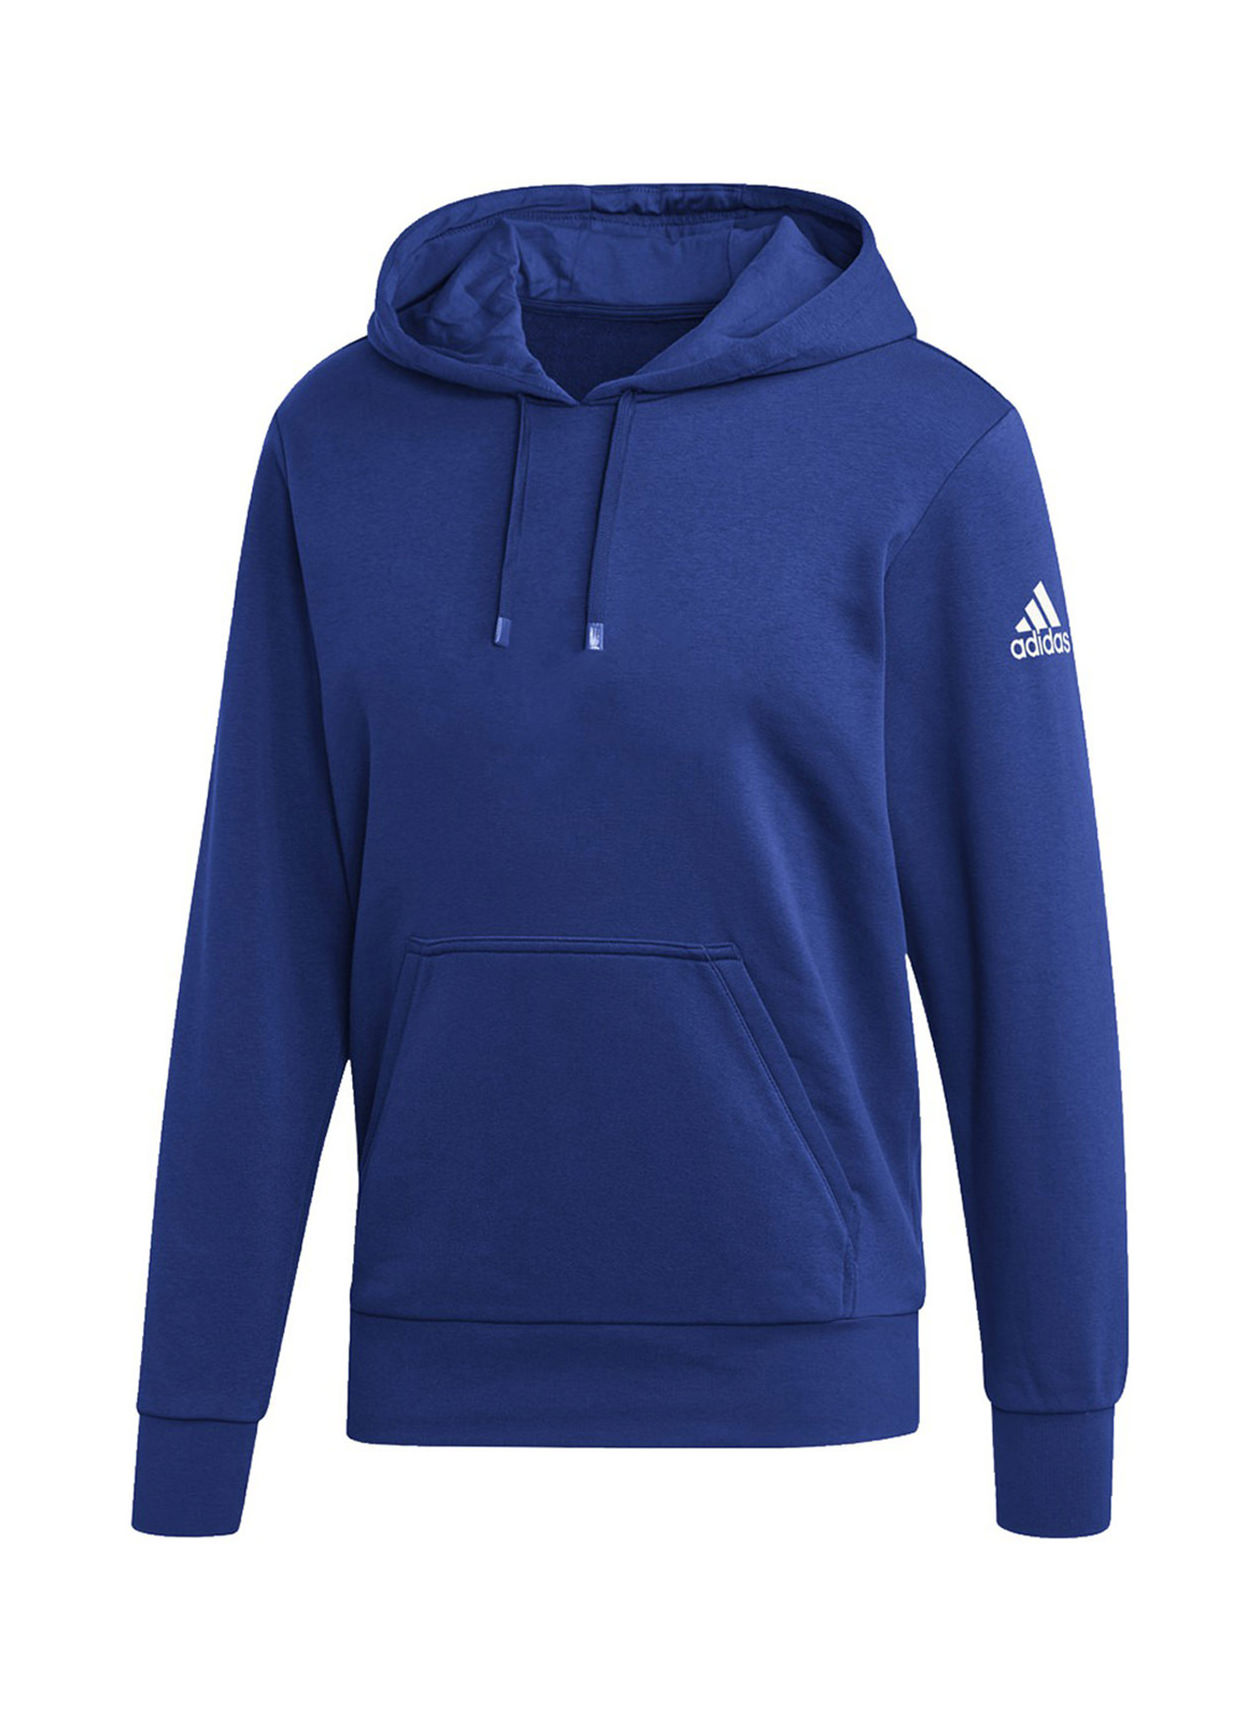 Logo Hoodies  Embroidered Adidas Men's Team Royal Blue / White Fleece  Hoodie